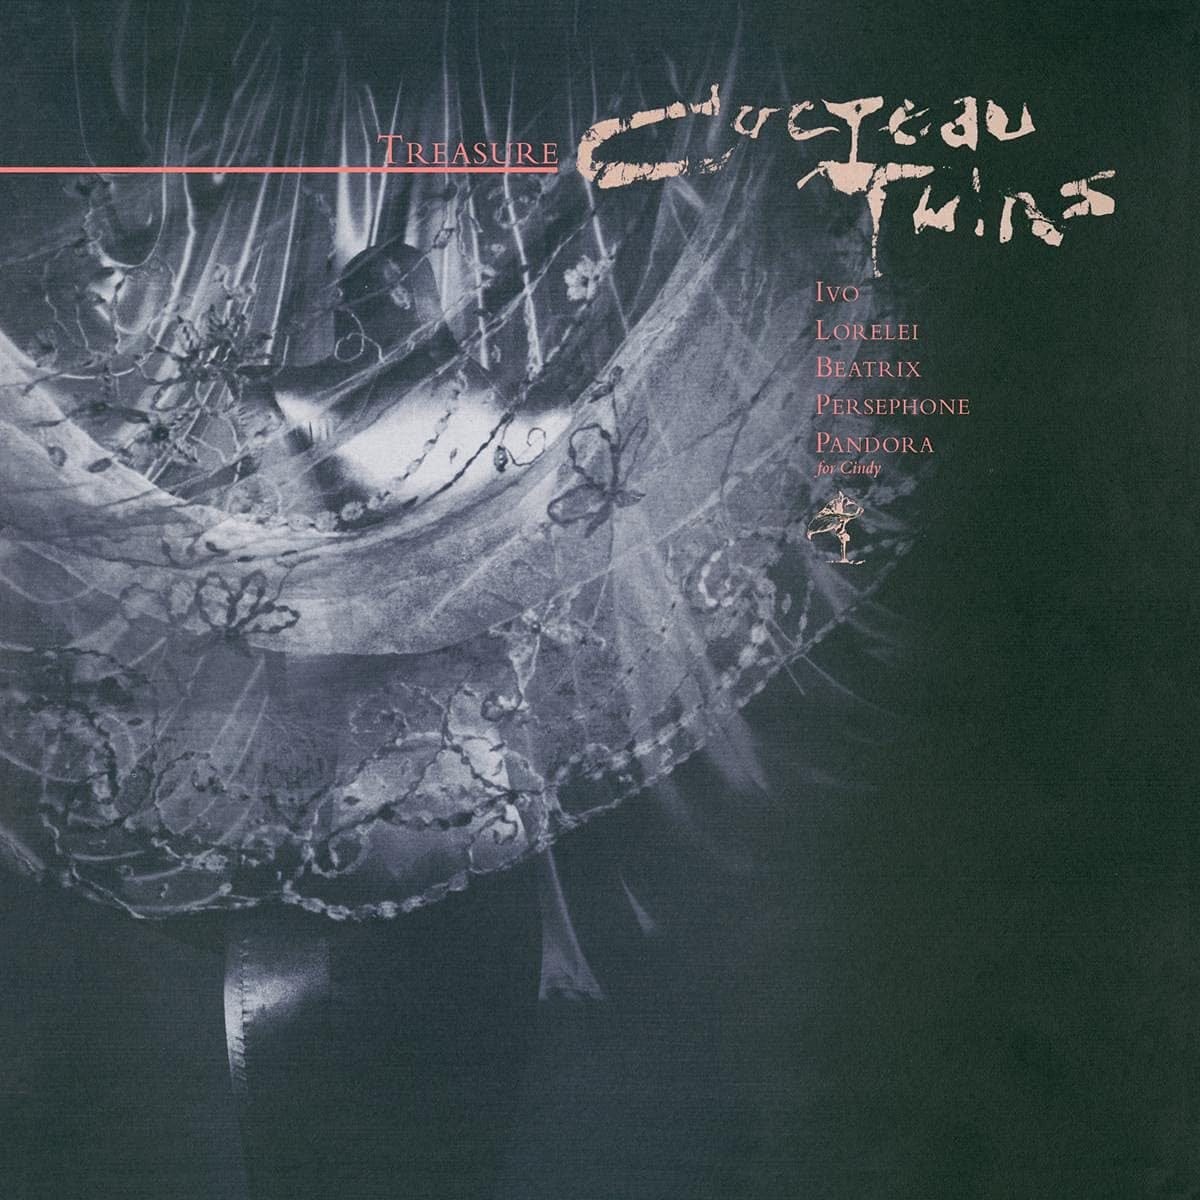 The cover art for Cocteau Twins album Treasure.